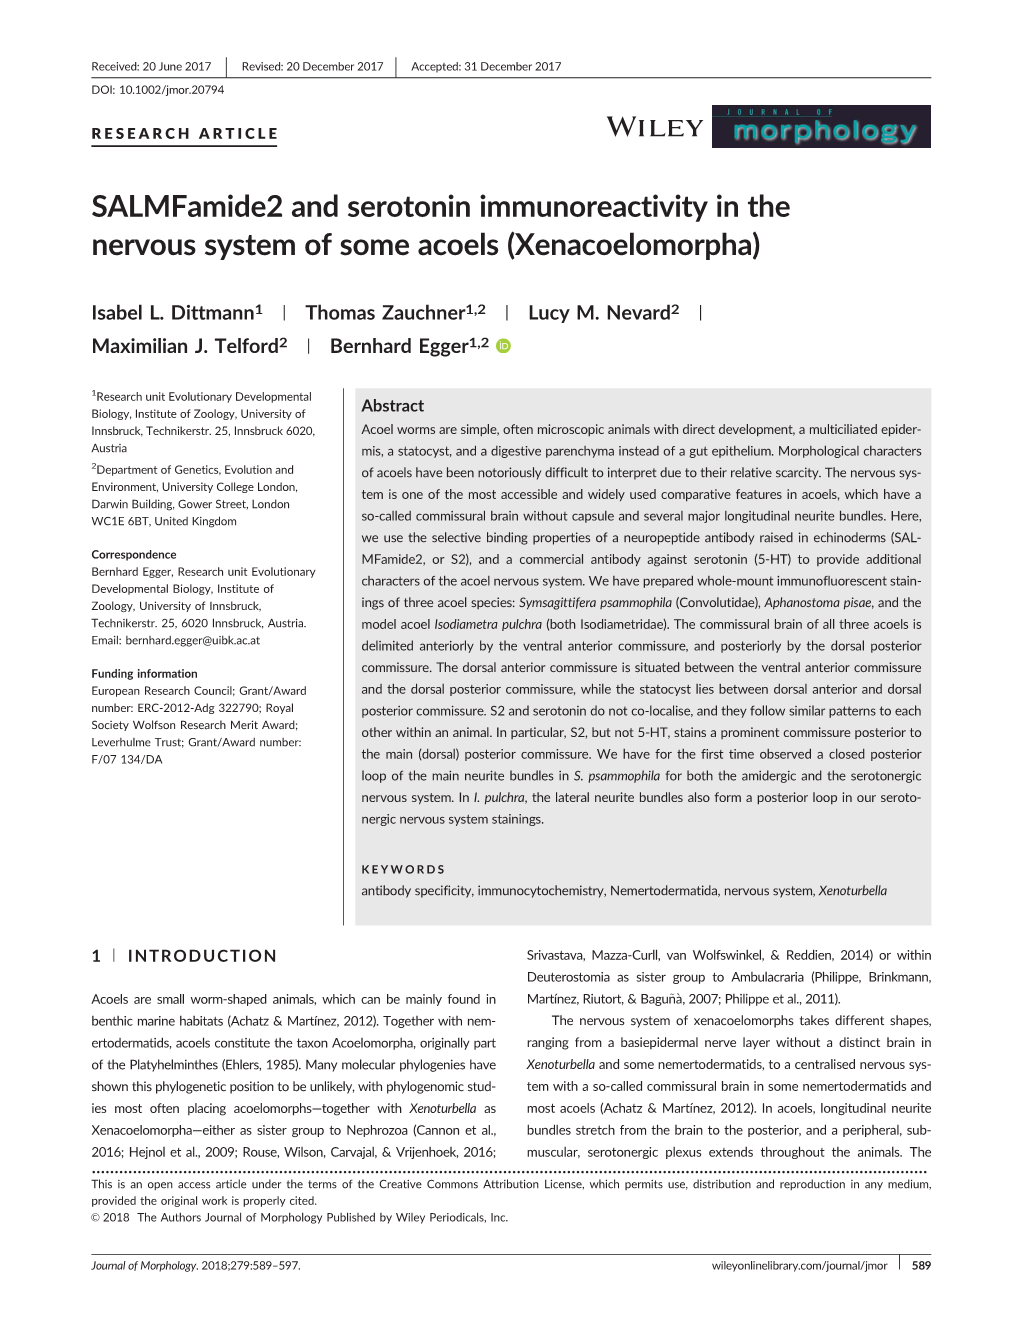 Salmfamide2 and Serotonin Immunoreactivity in the Nervous System of Some Acoels (Xenacoelomorpha)